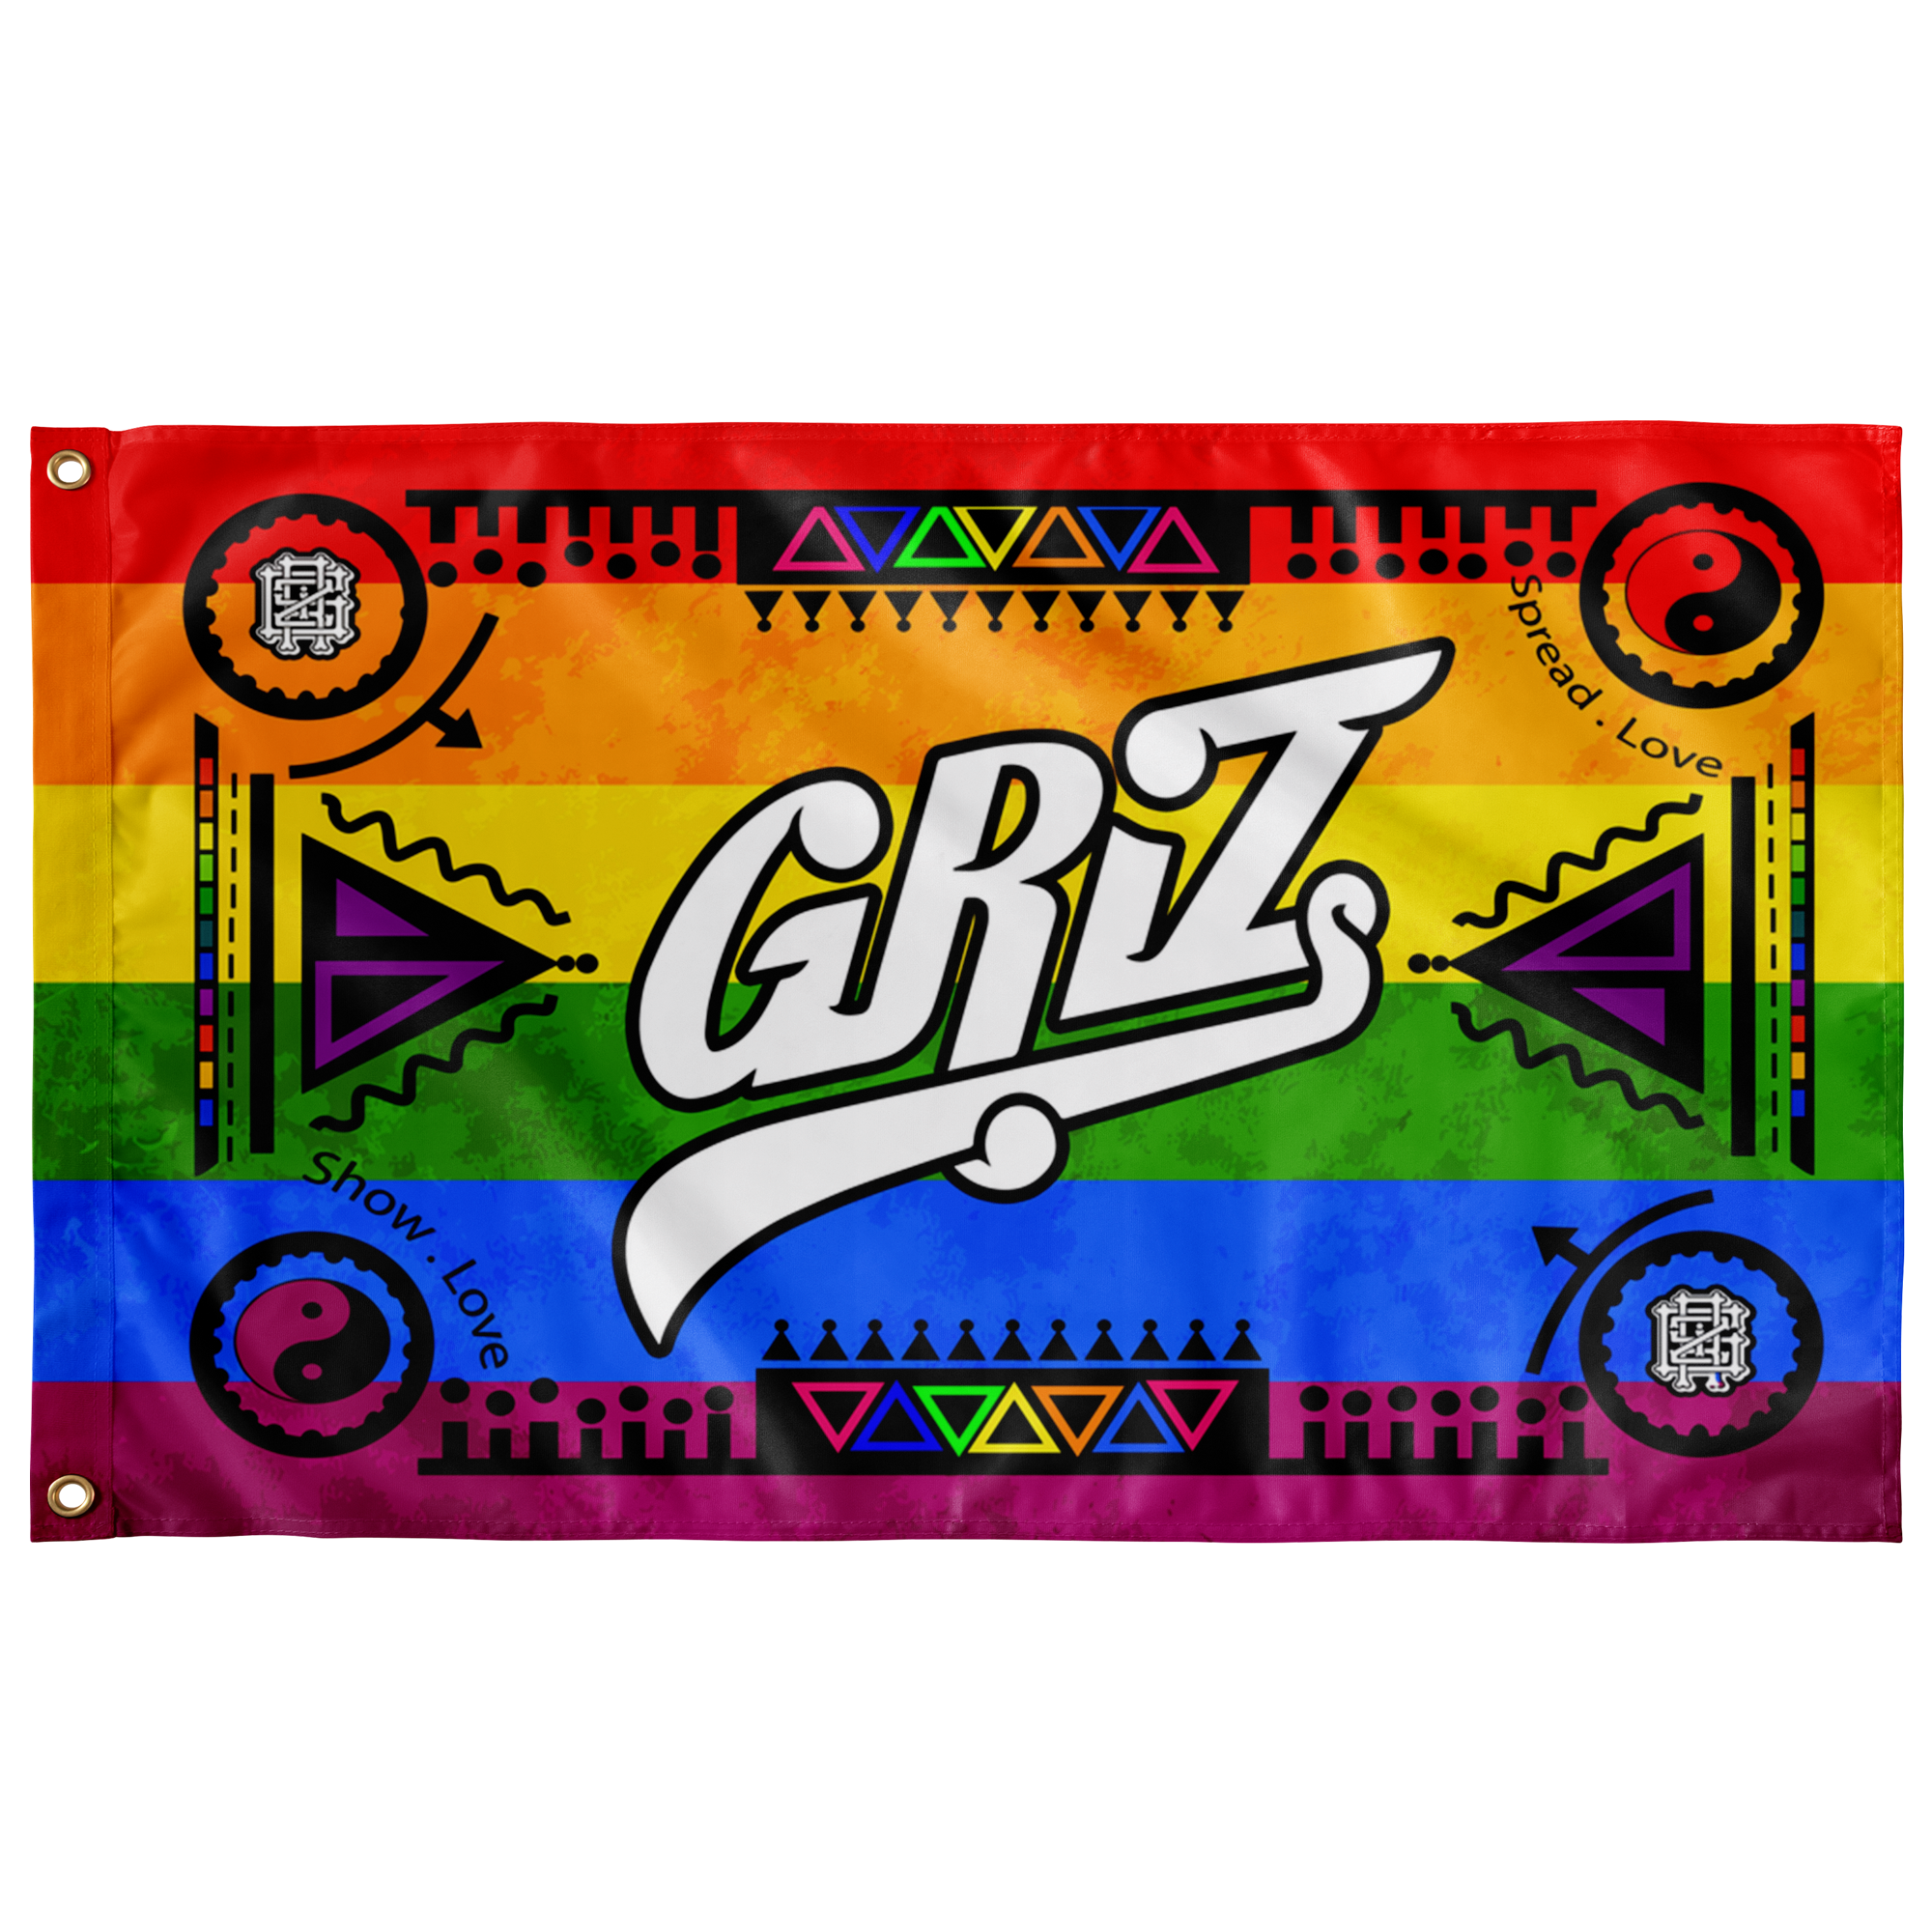 A Rave flag with Griz Print